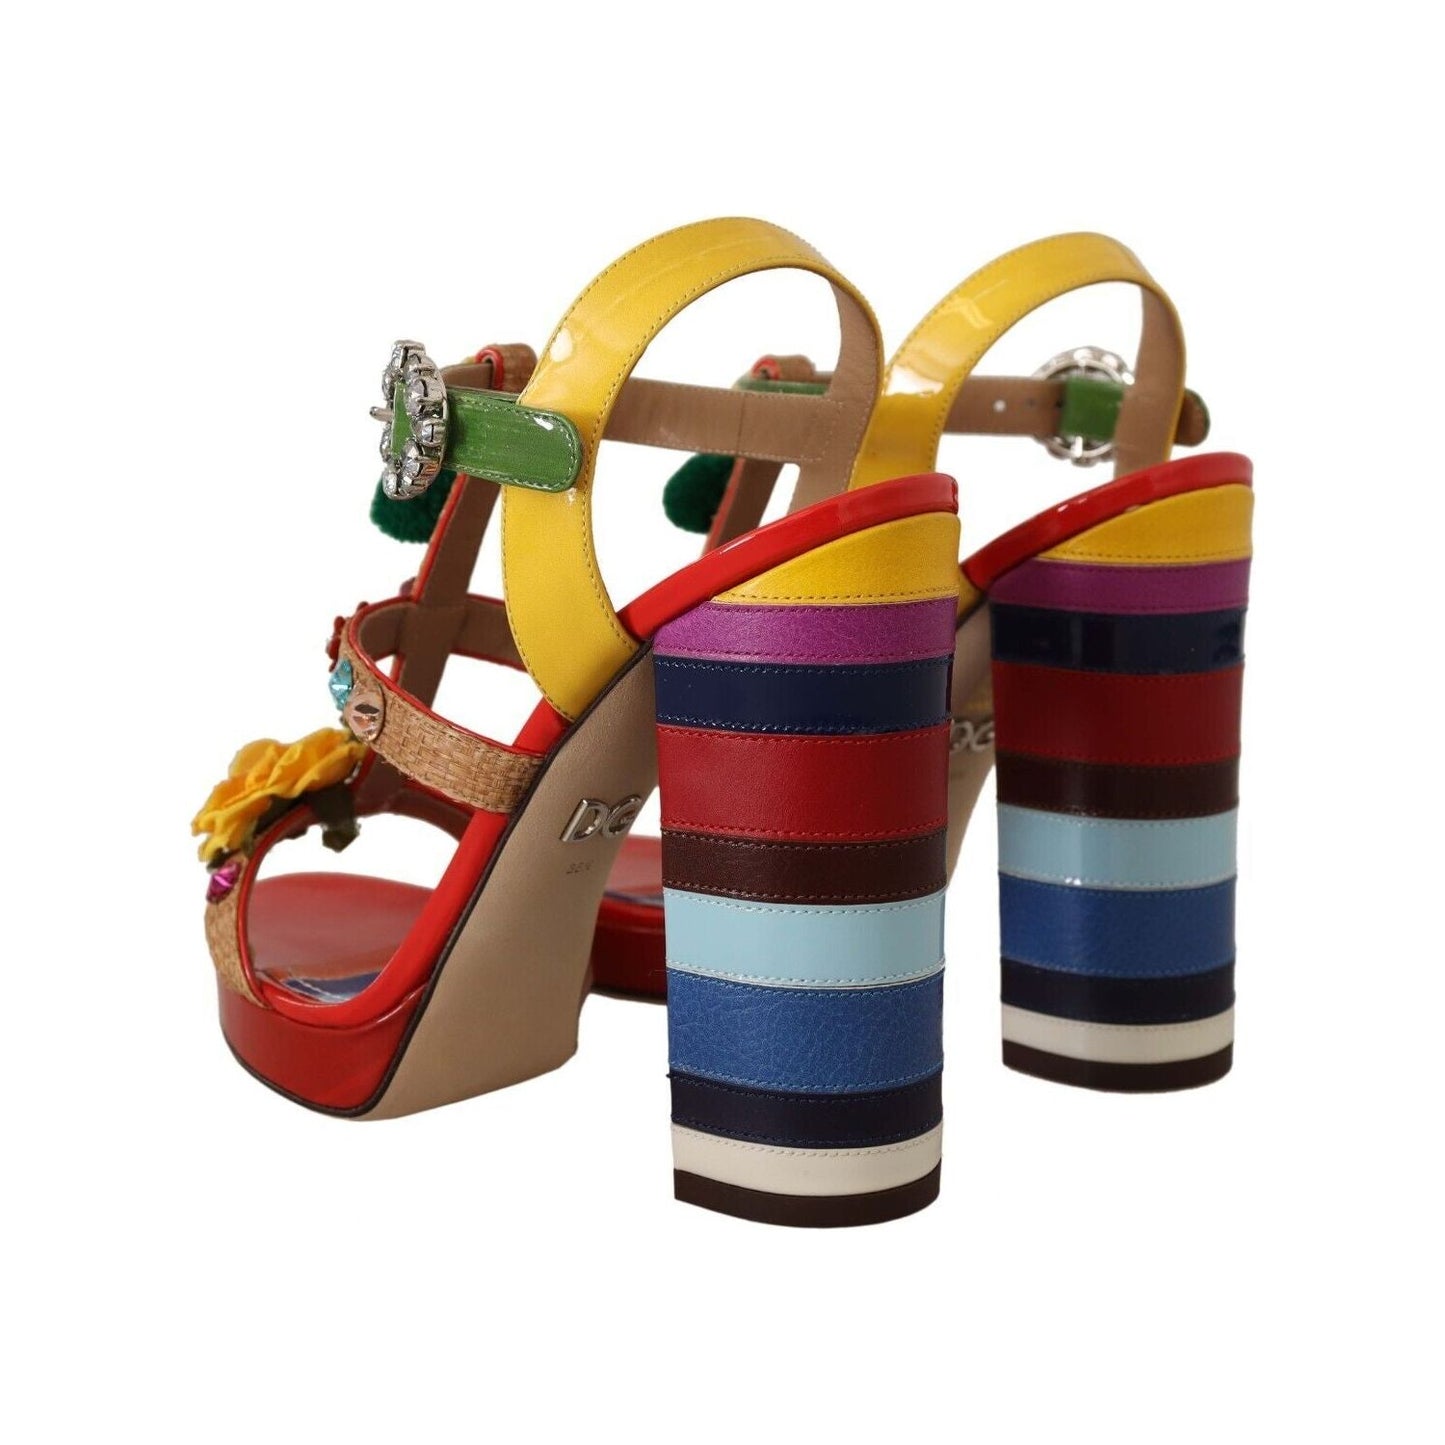 Dolce & Gabbana Multicolor Floral Ankle Strap Heels multicolor-floral-ankle-strap-heels